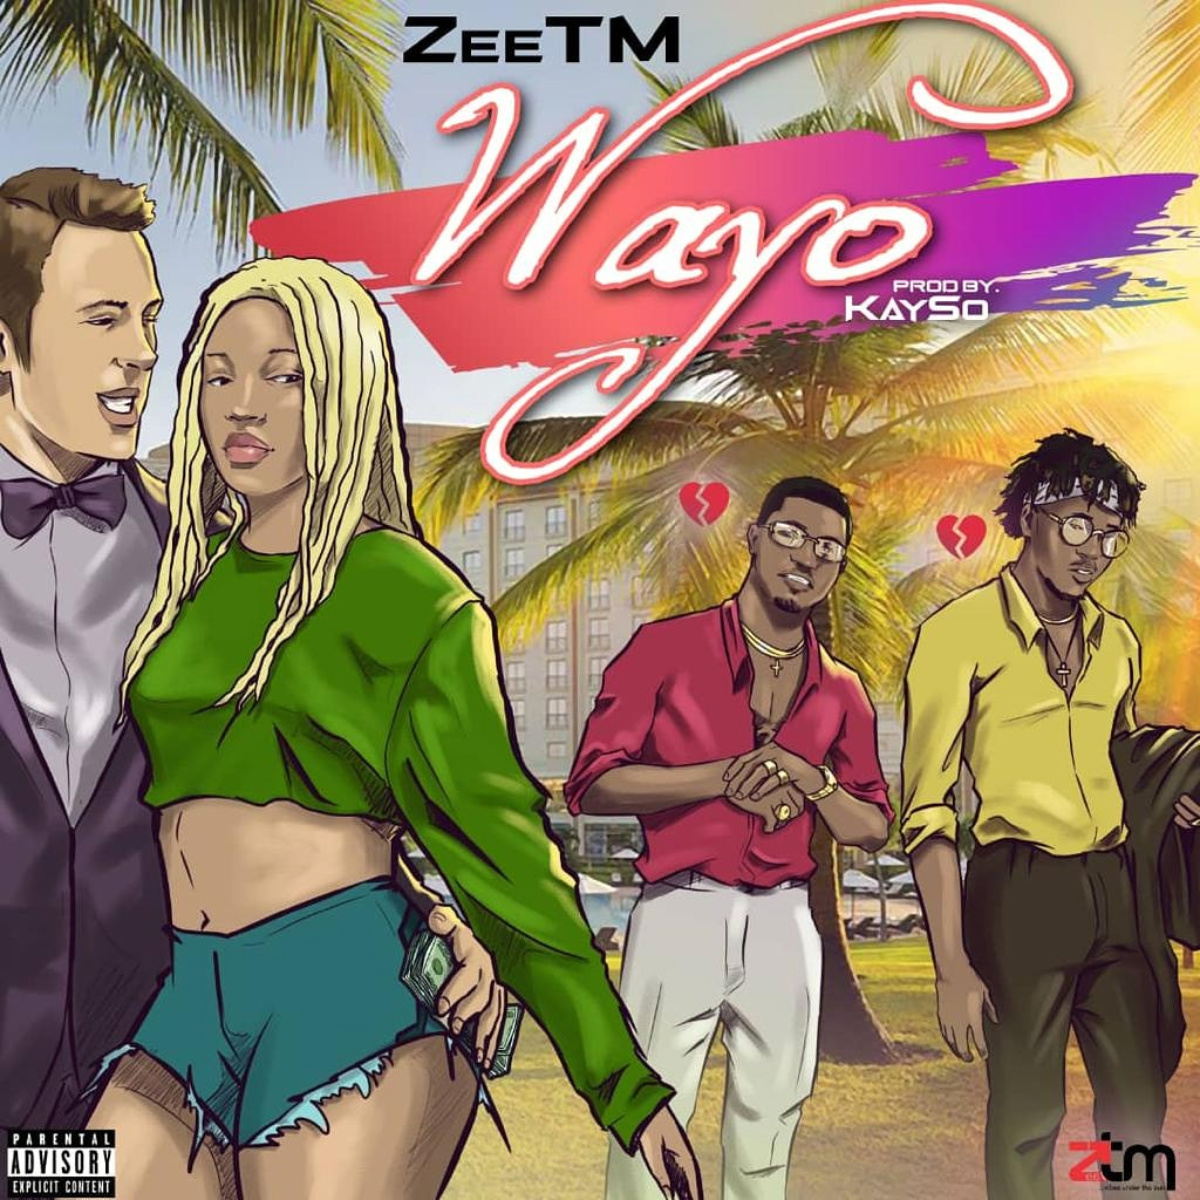 Lyrics: Wayo by ZeeTM